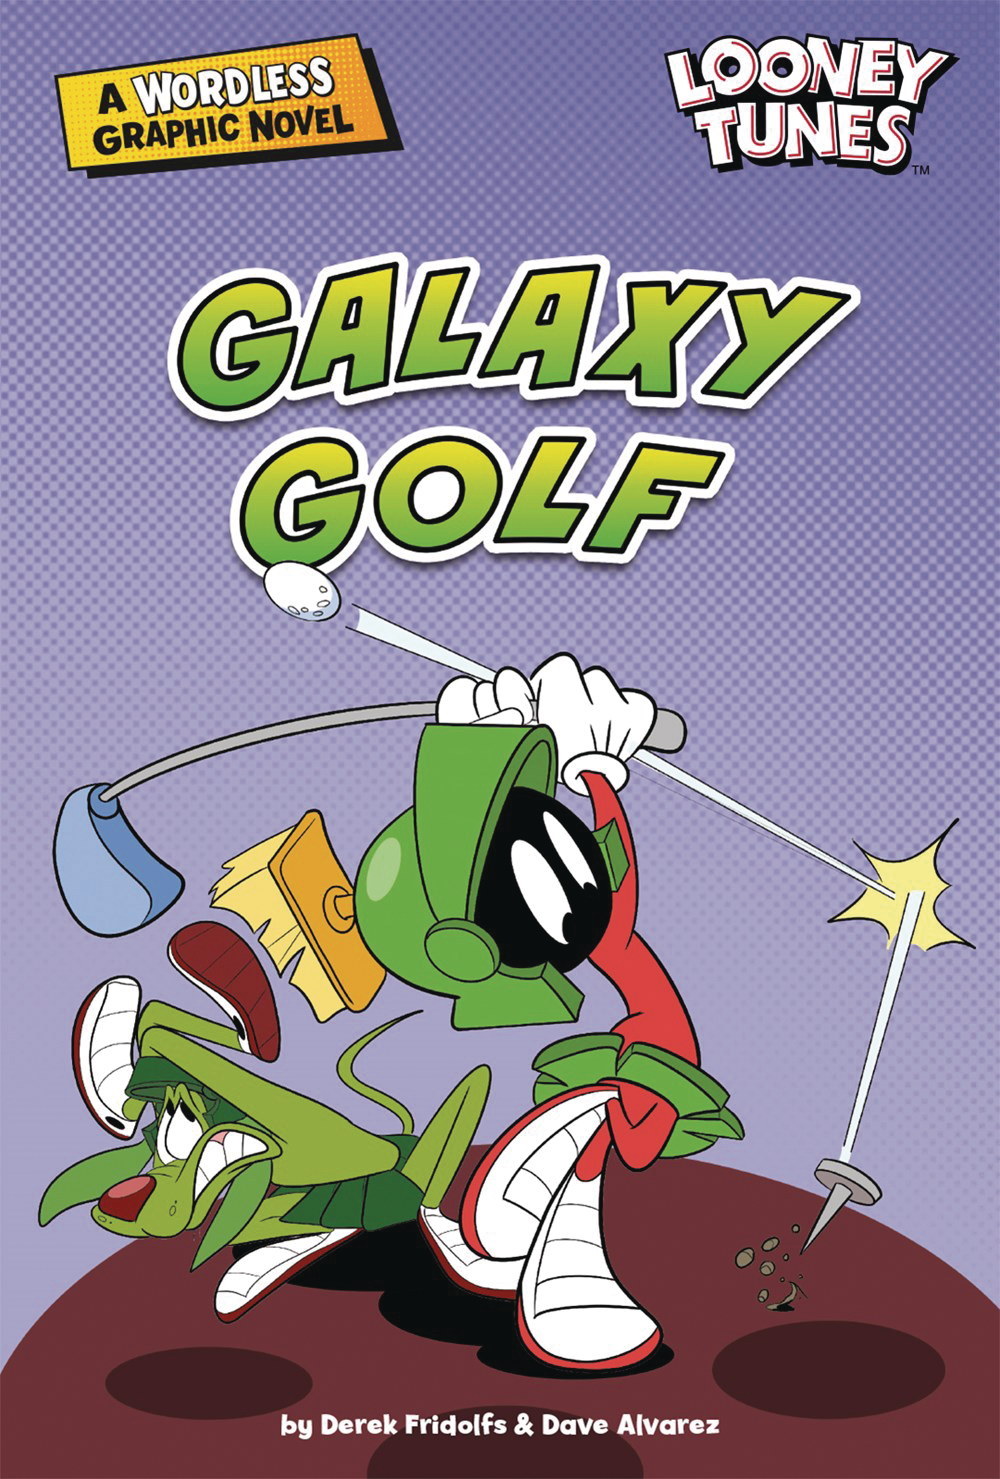 Looney Tunes Wordless Graphic Novel #4 Galaxy Golf